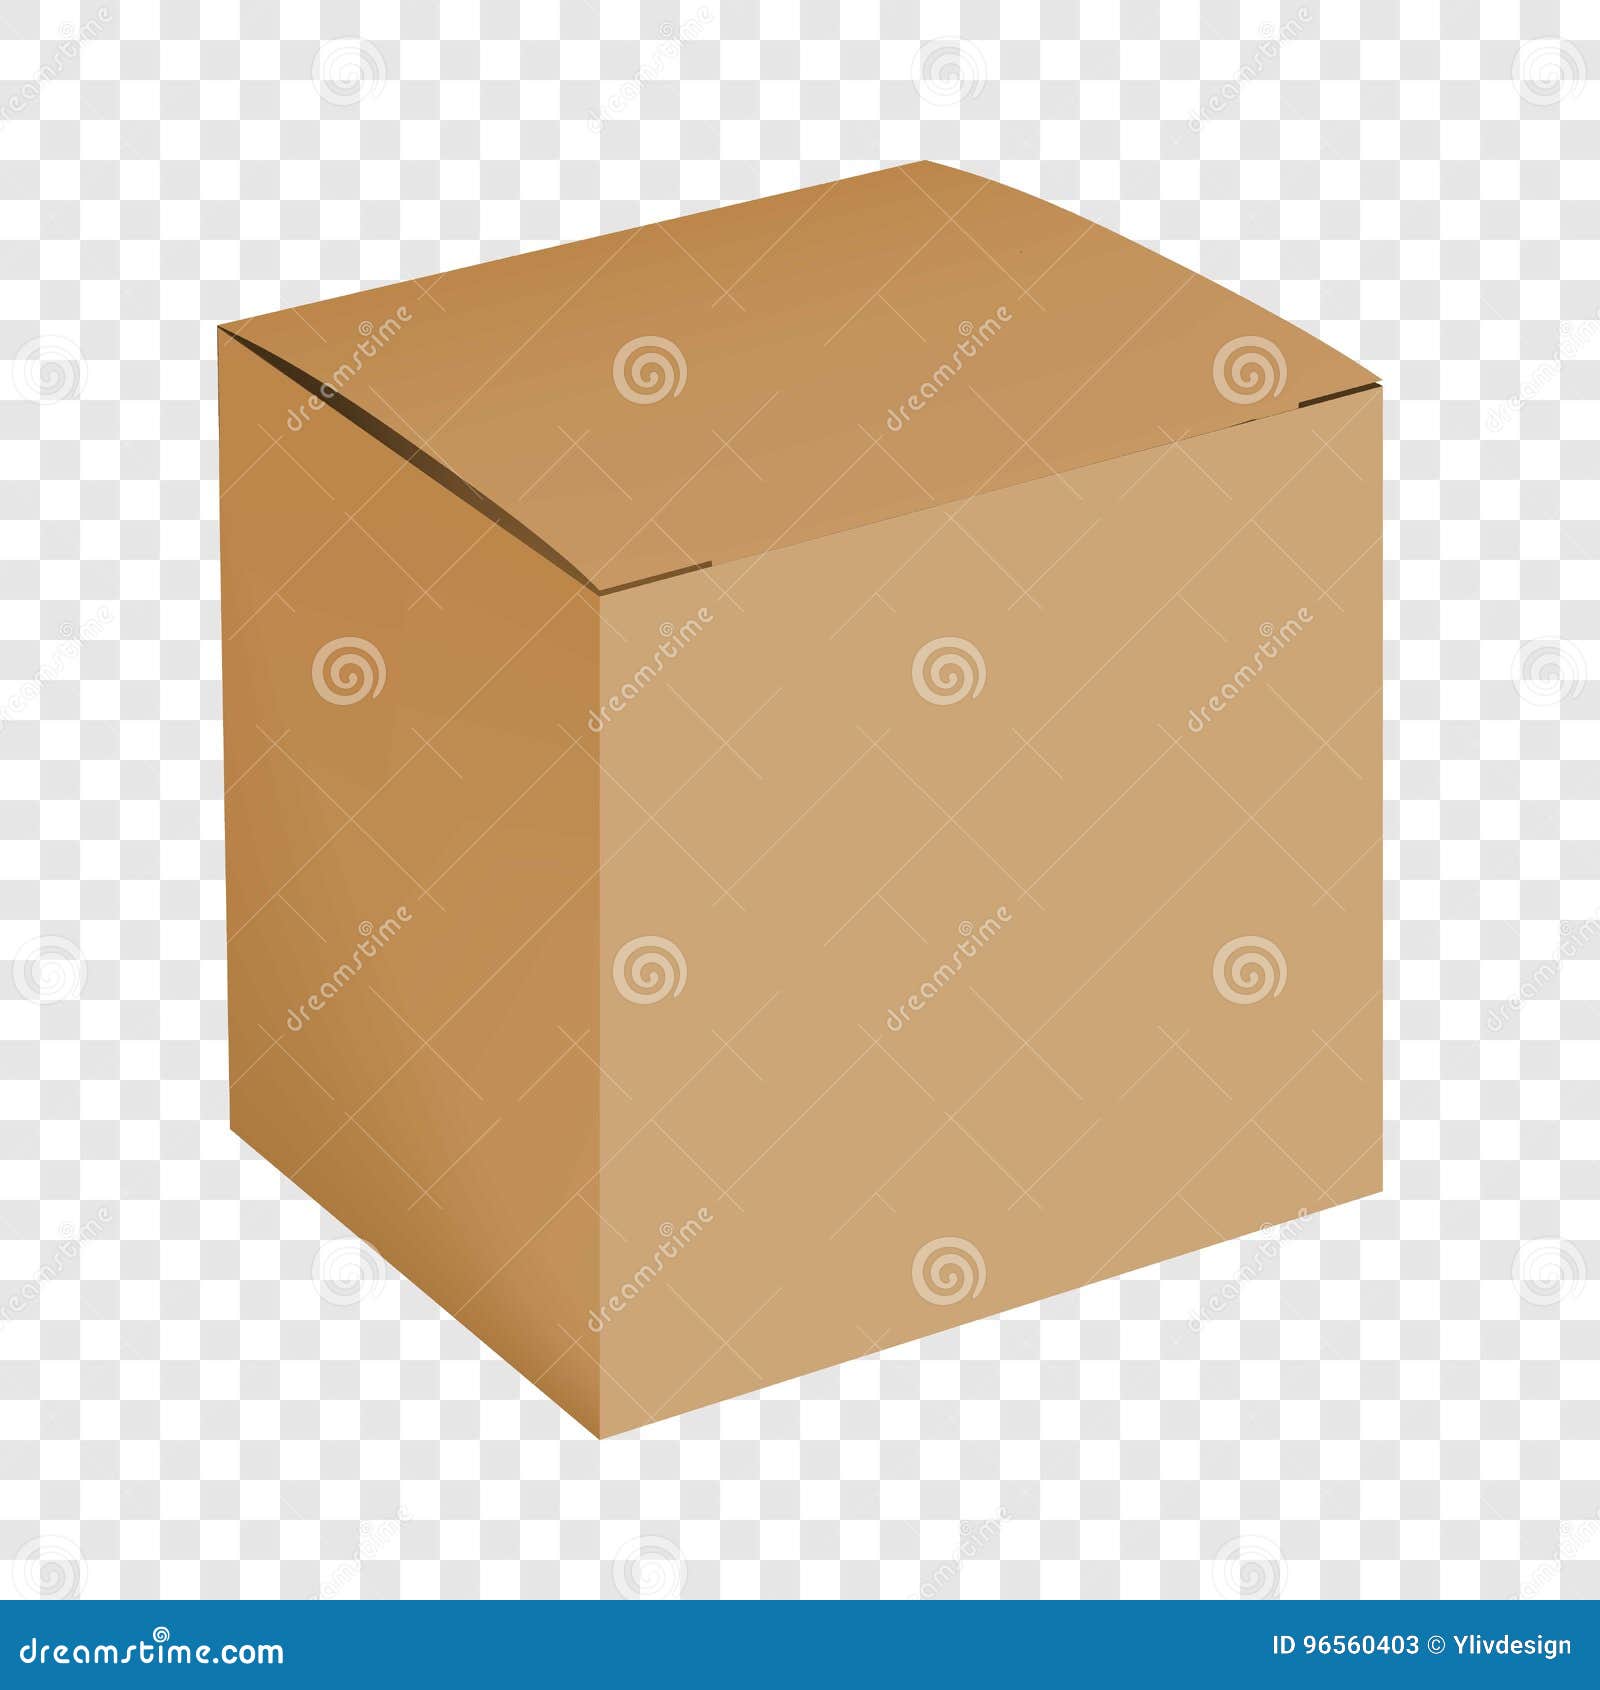 Download Blank Cardboard Box Mockup, Realistic Style Stock Vector ...